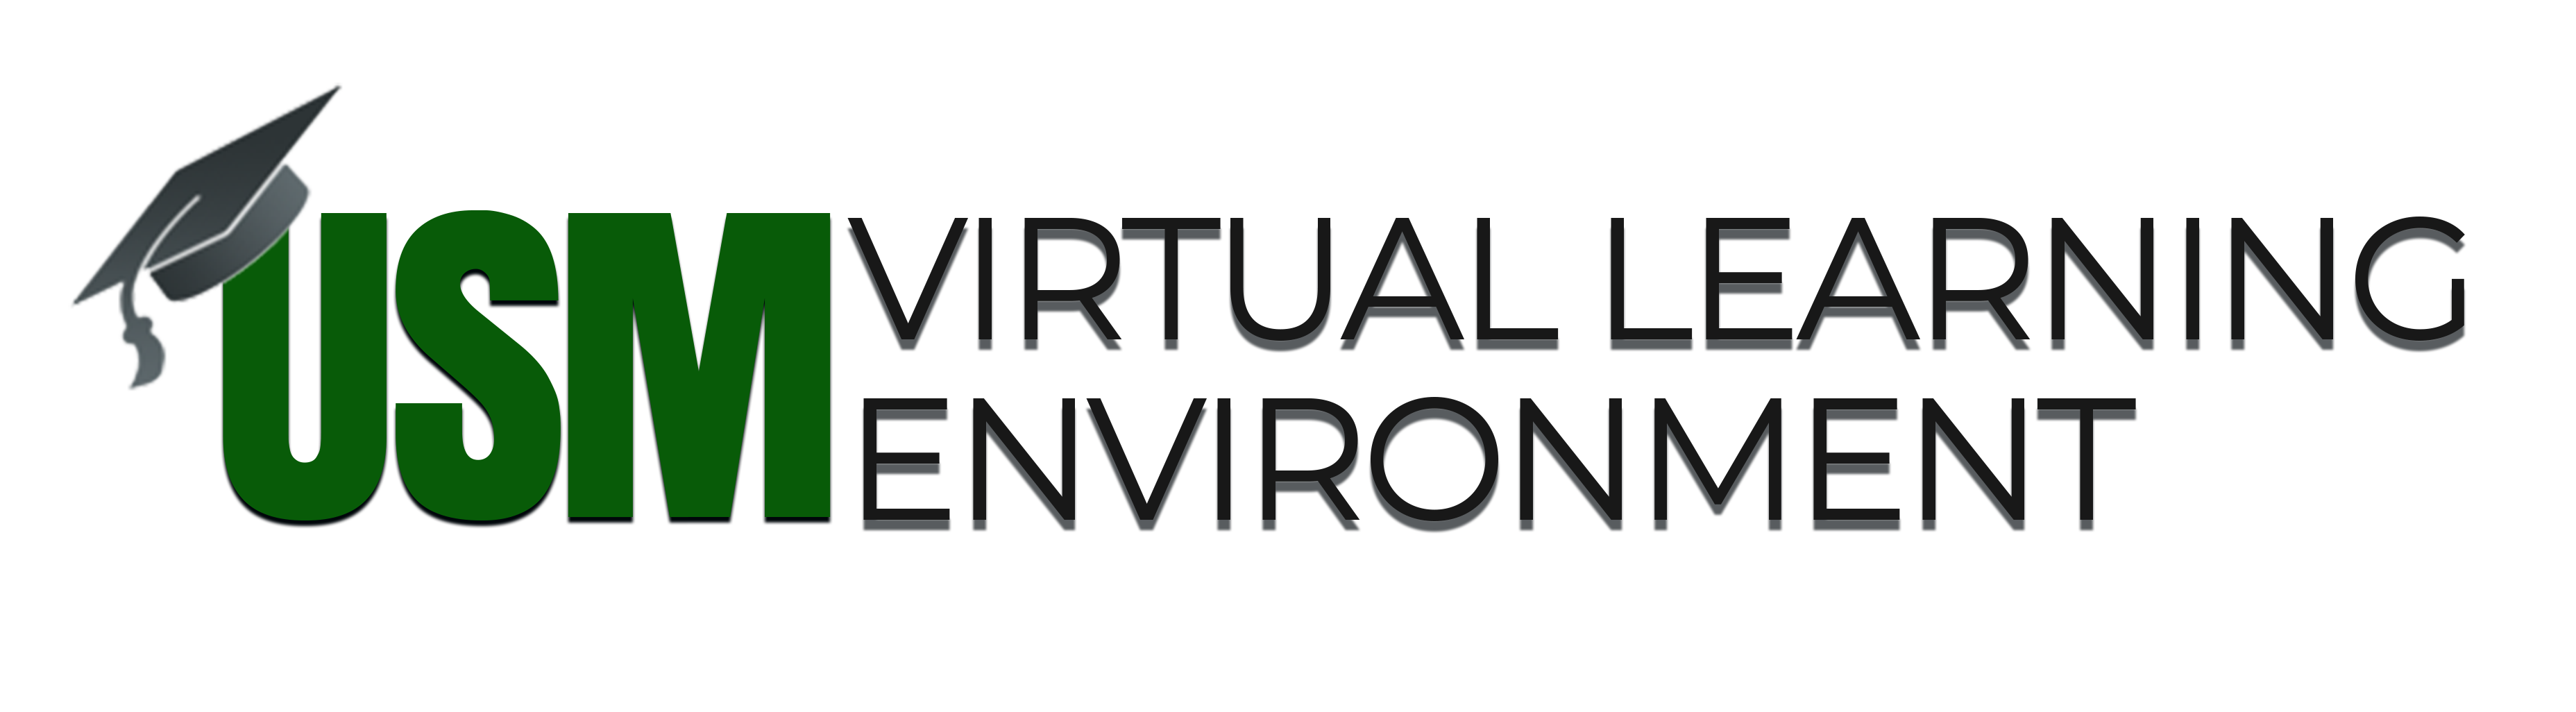 VIRTUAL U: Virtual Learning Environment